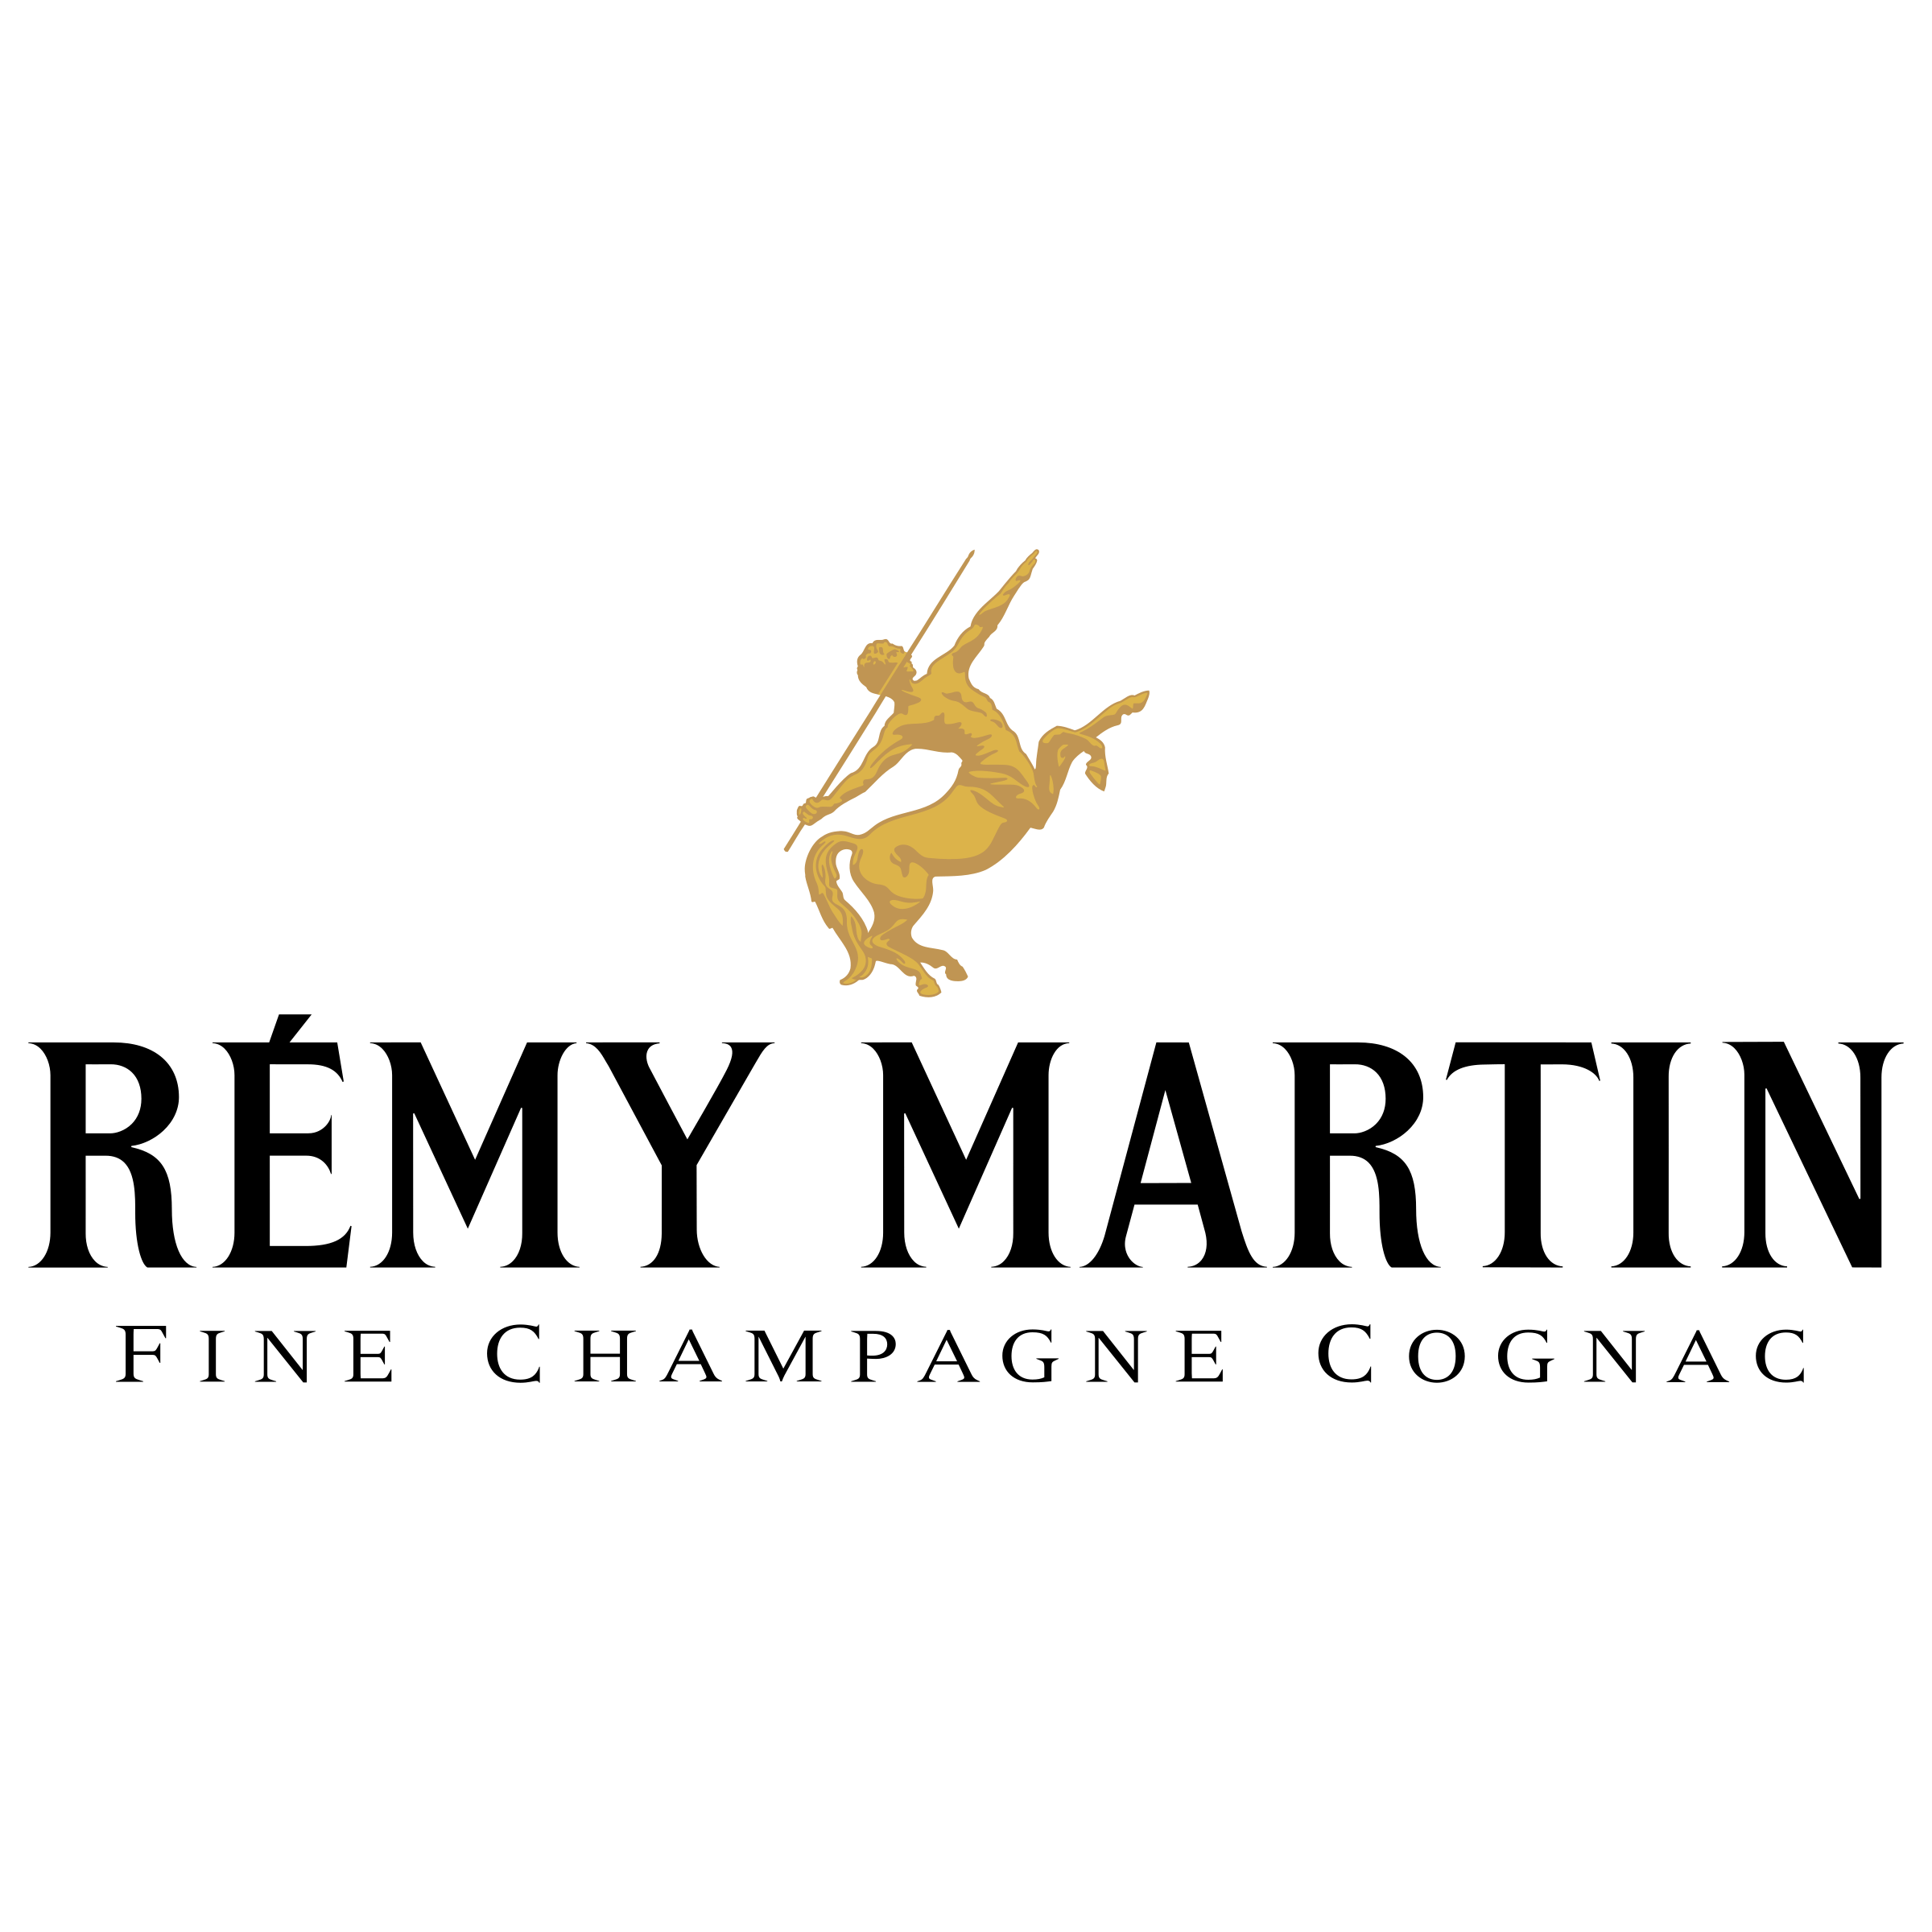 Martin Logo - Remy Martin Logo PNG Transparent & SVG Vector - Freebie Supply